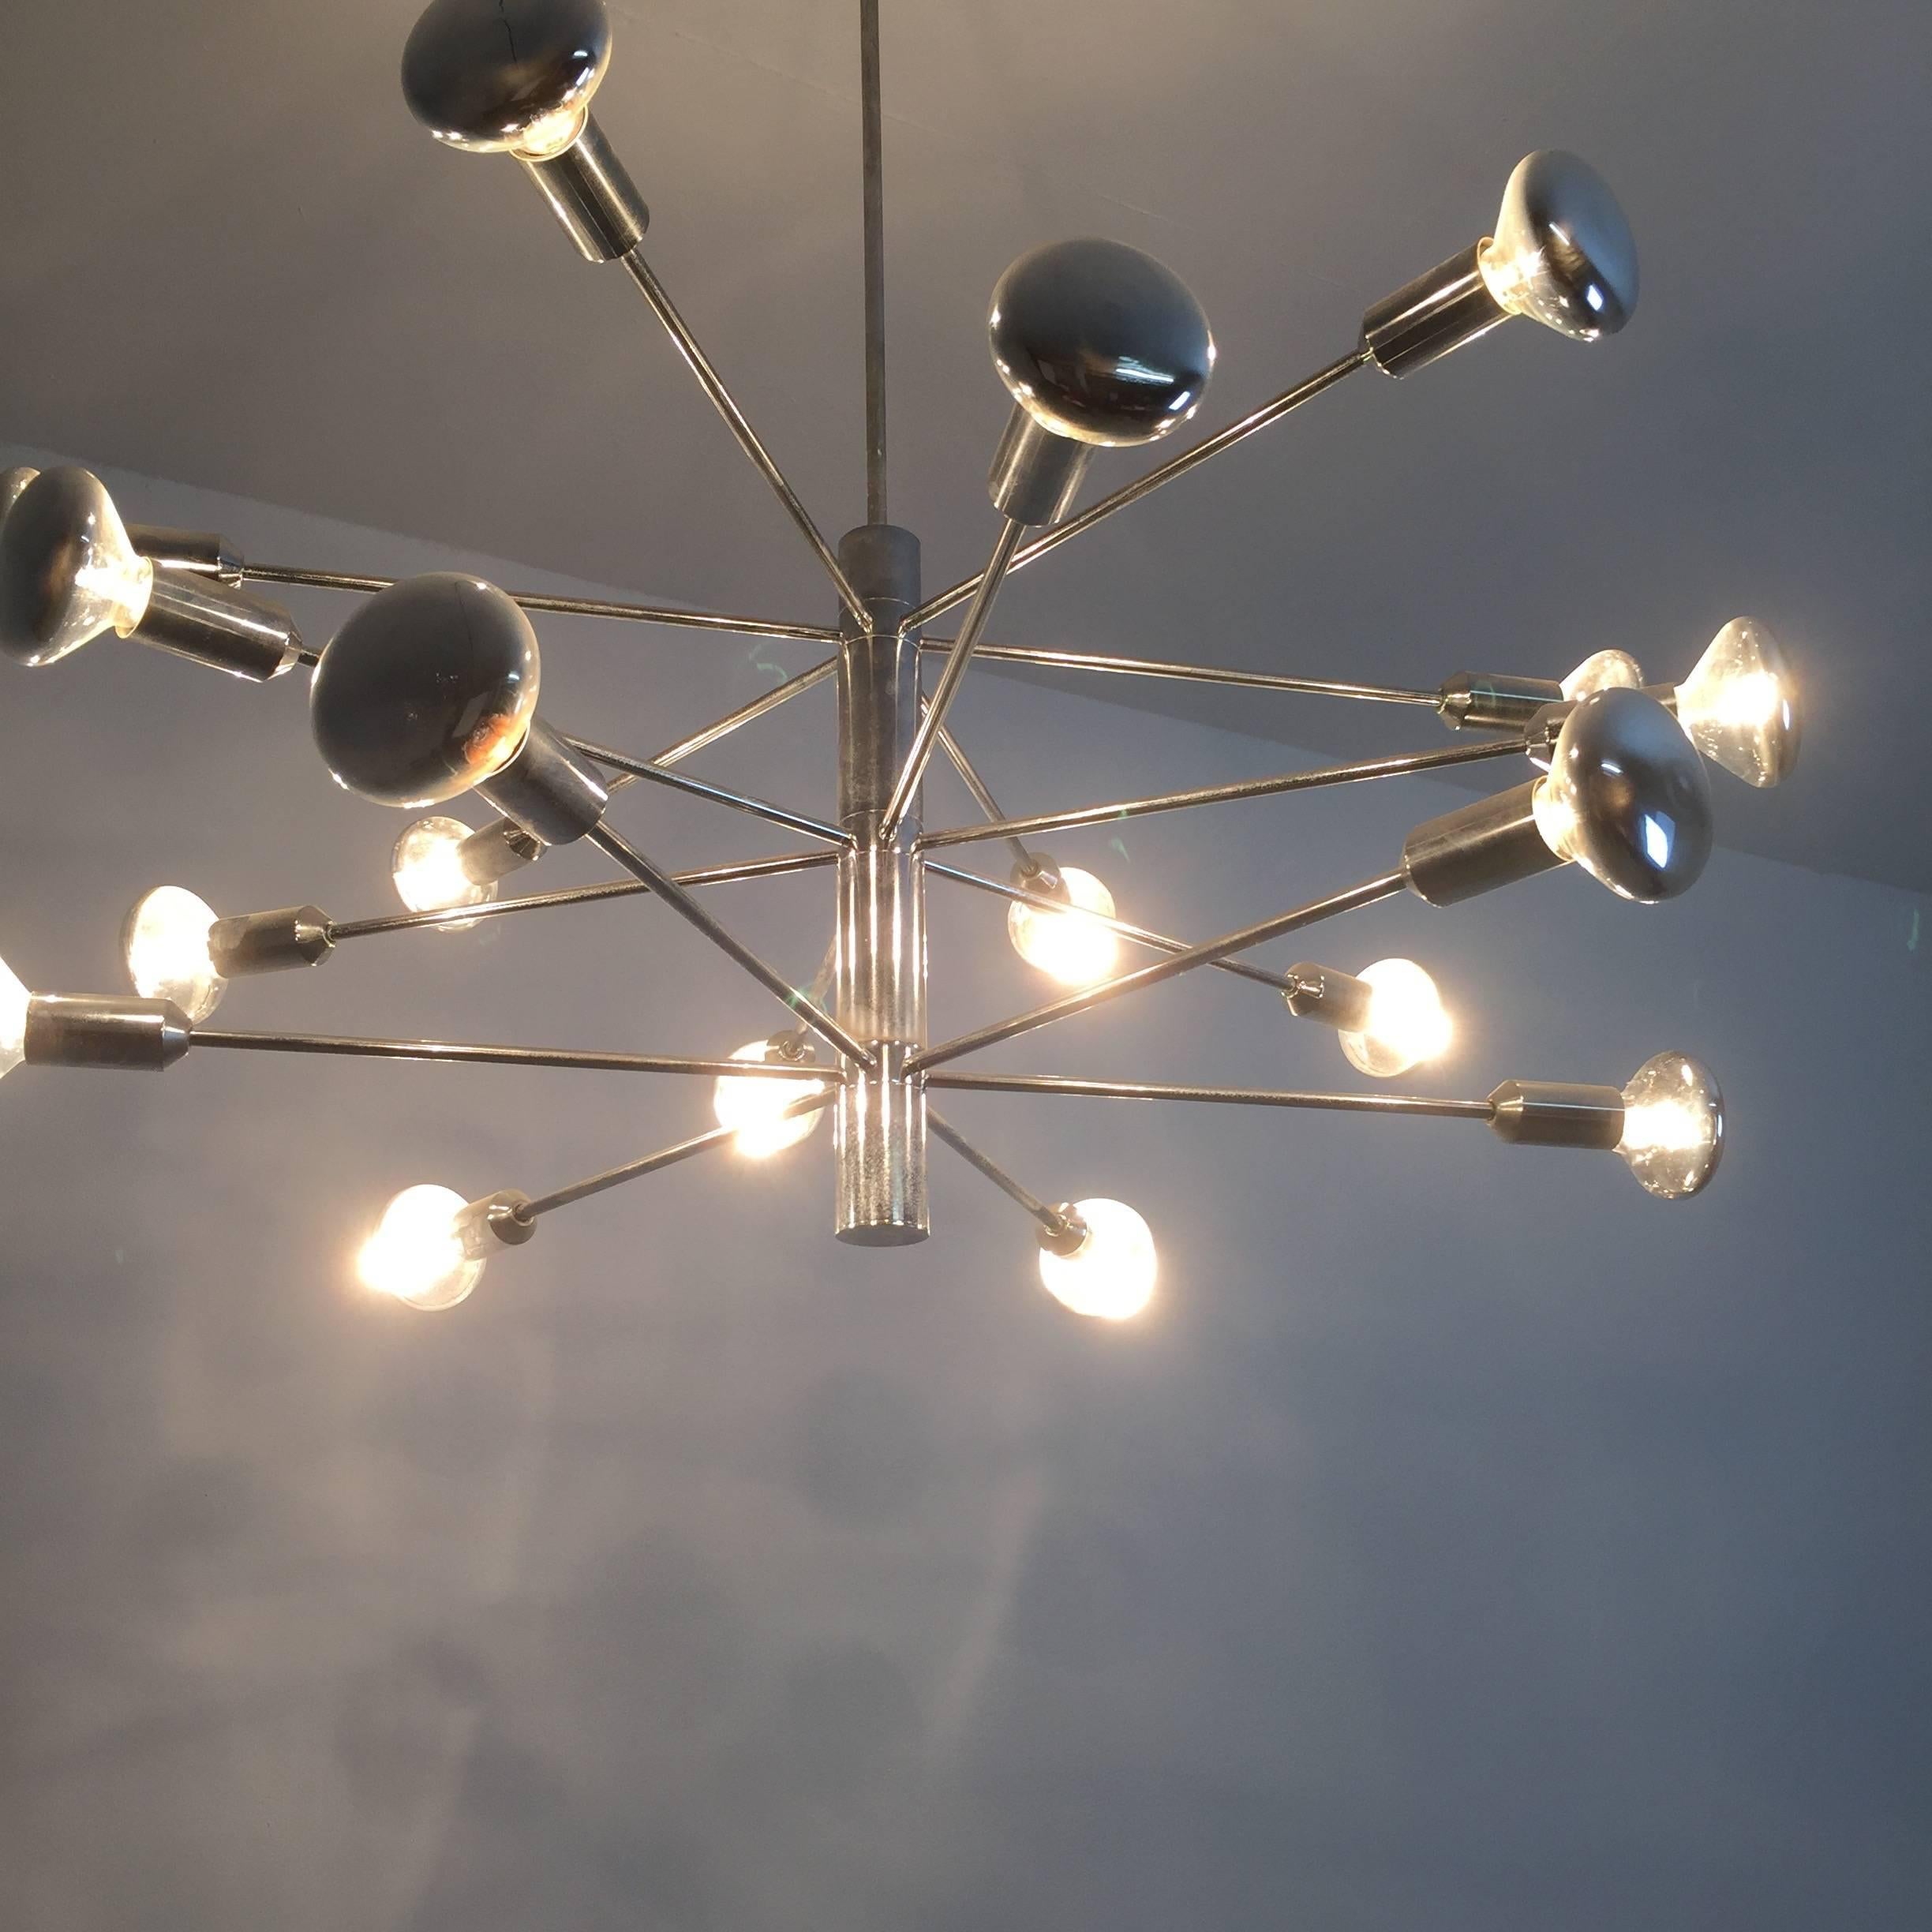 20th Century Modernist Chrome Sputnik Hanging Light by Cosack Lights, 1960s, Germany